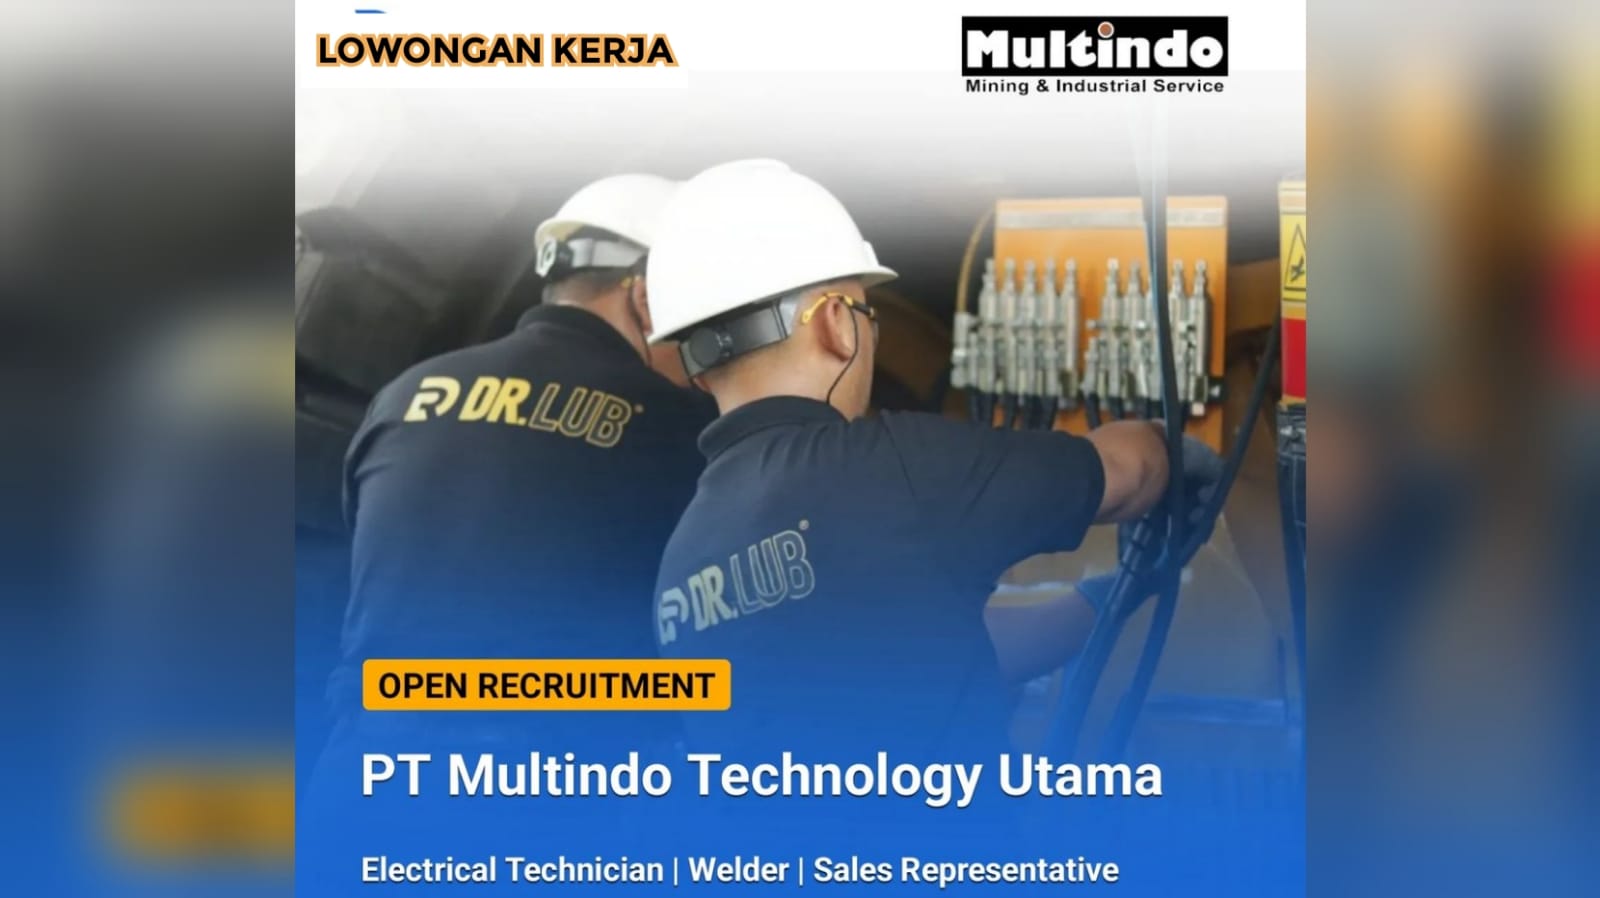 Lowongan Kerja Pertambangan di Palembang PT Multindo Technology Utama untuk Lulusan SMA SMK D3 S1  